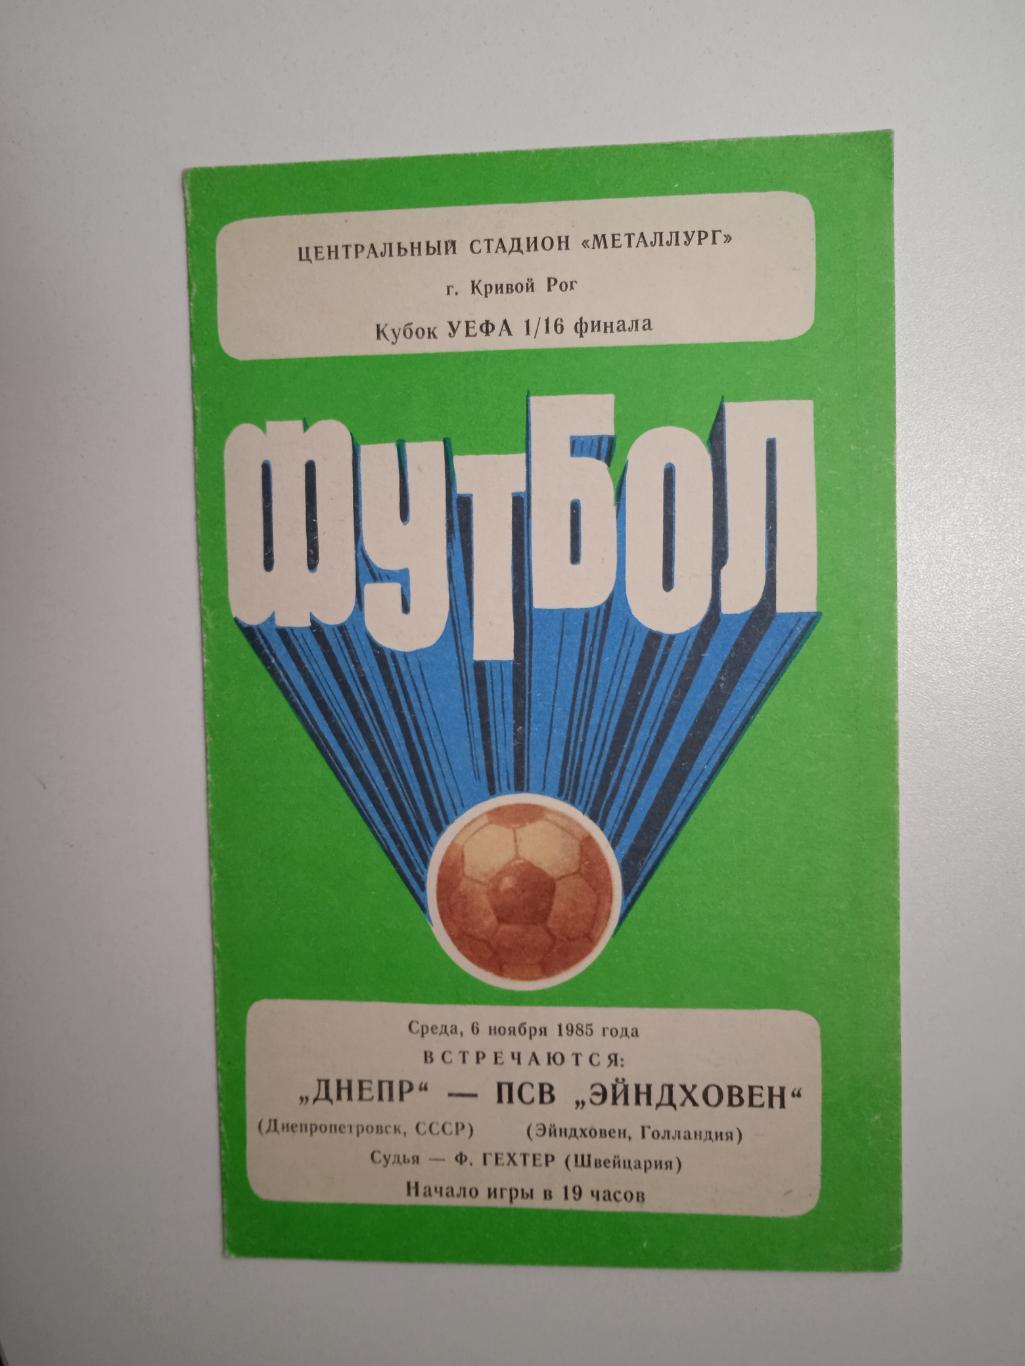 Днепр Днепропетровск - ПСВ Эйндховен Голландия 06.05.1985